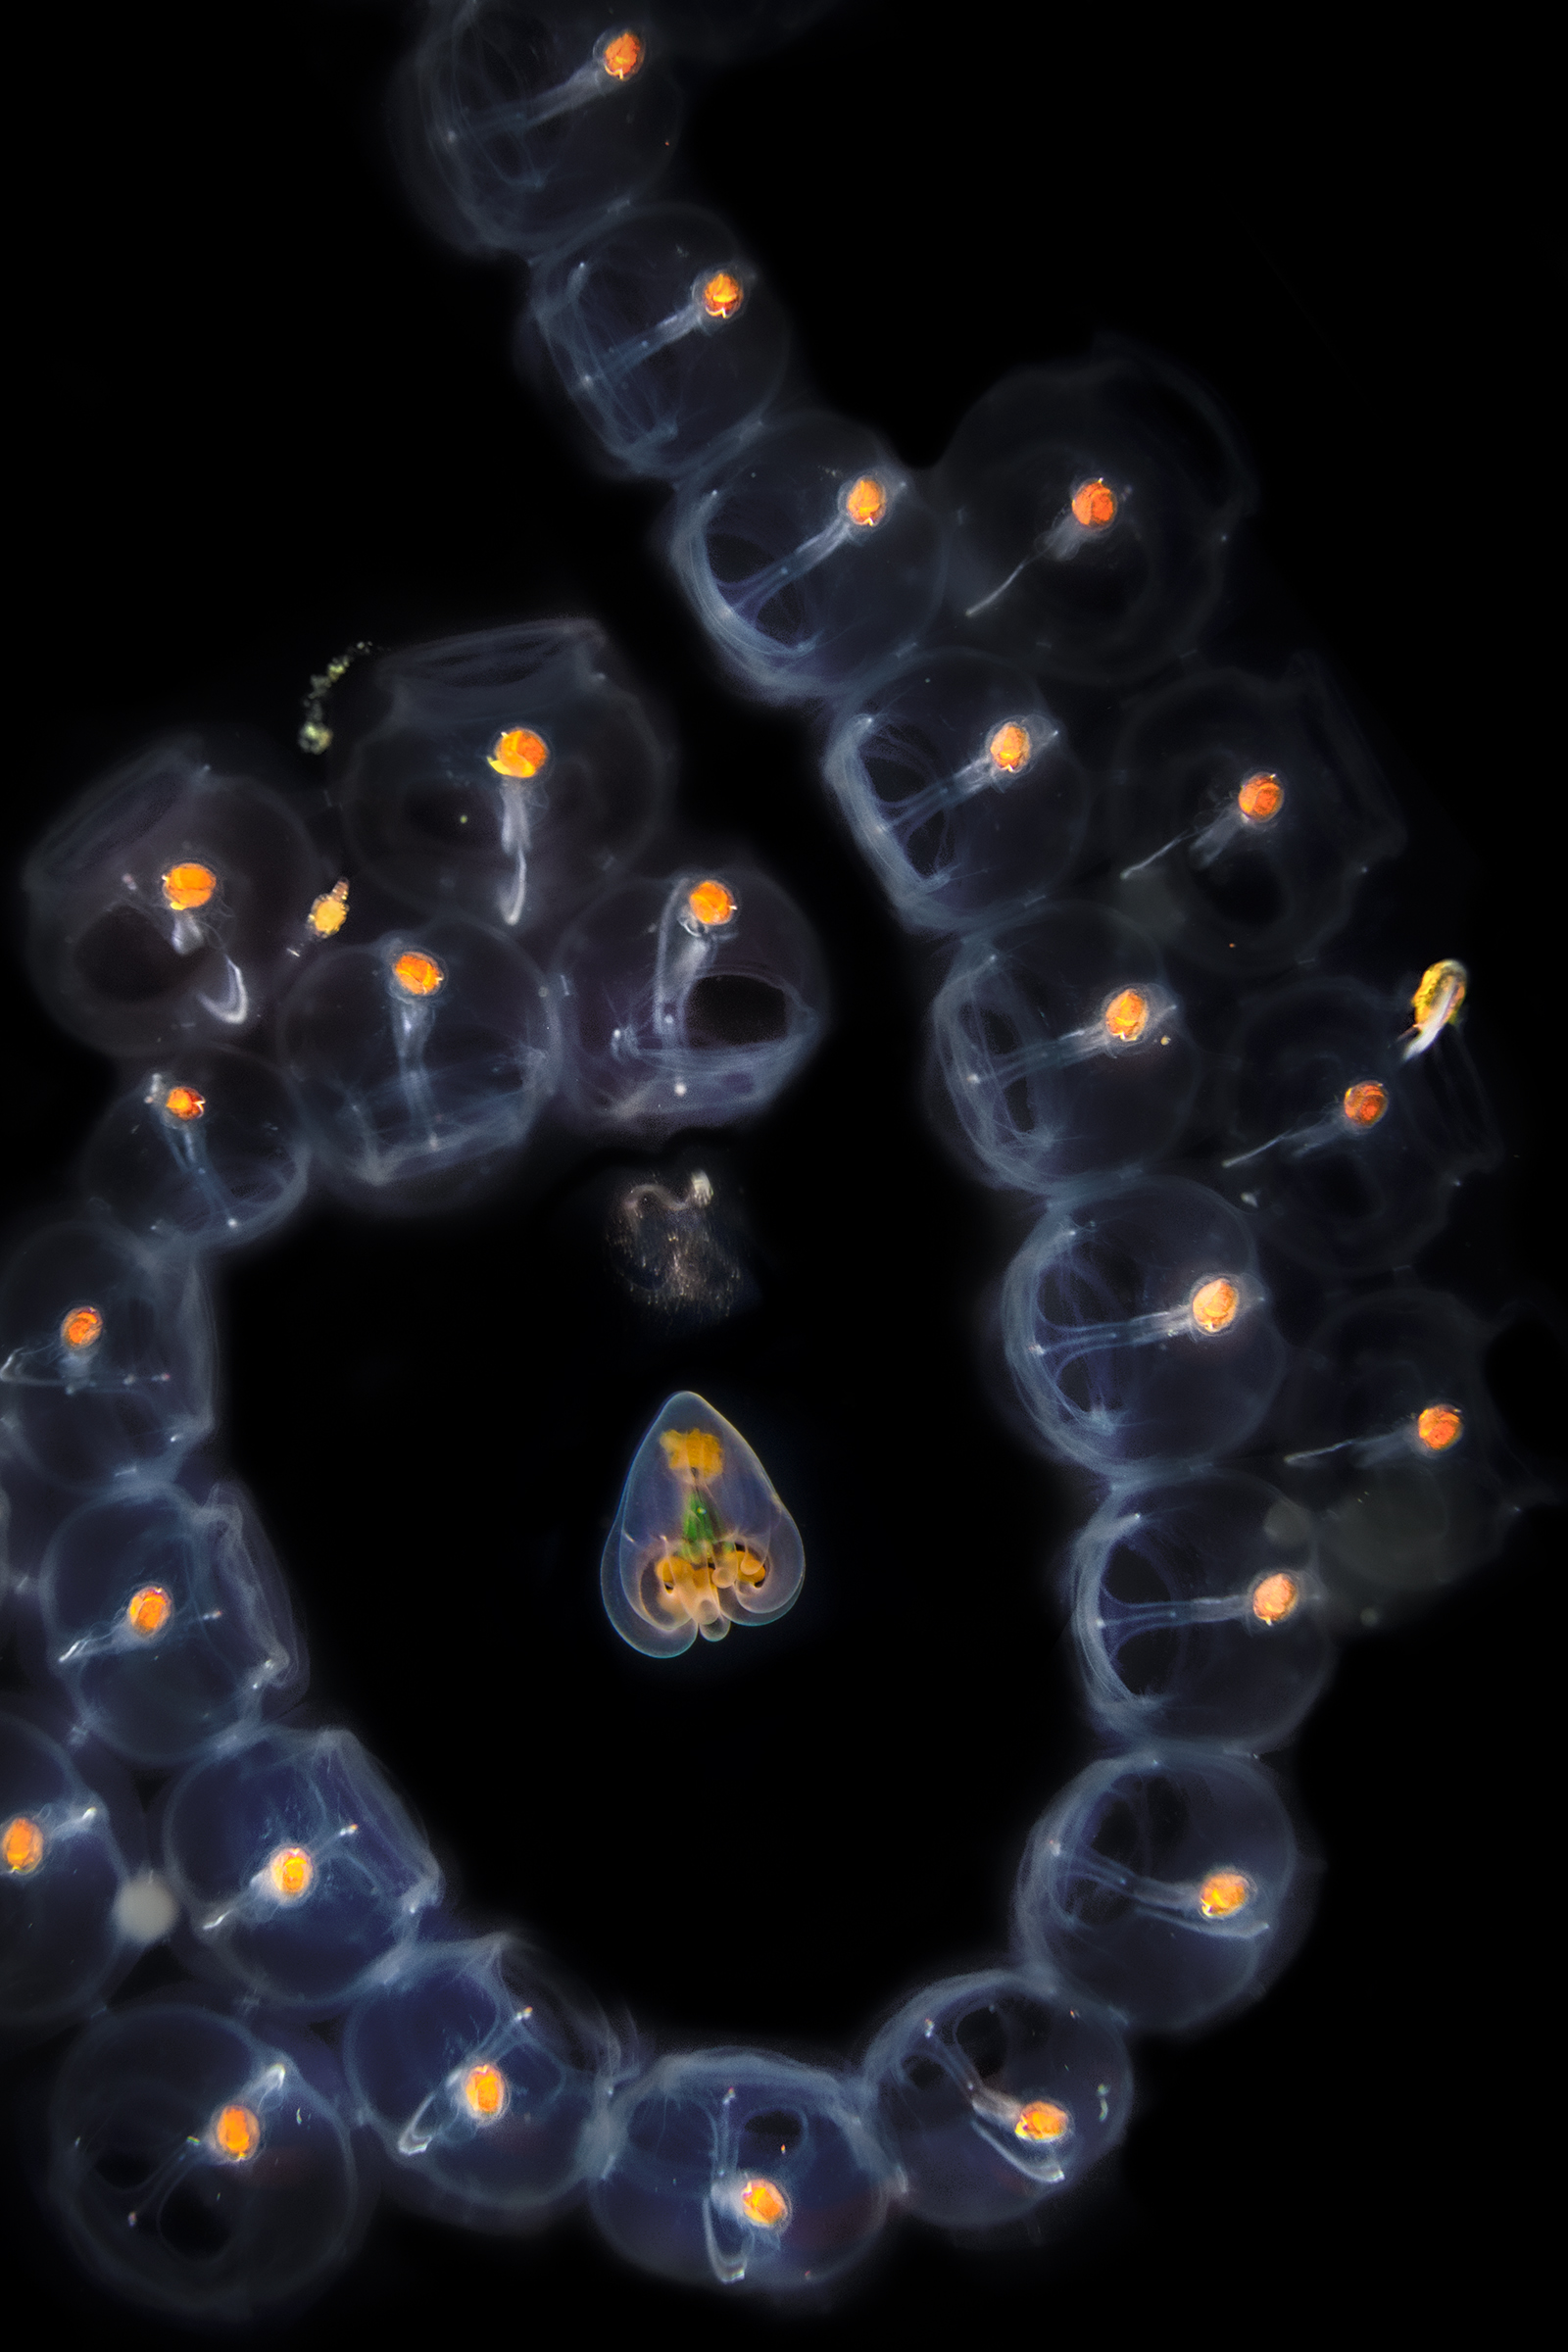 cinta di salpa e anemone in fase larvale...